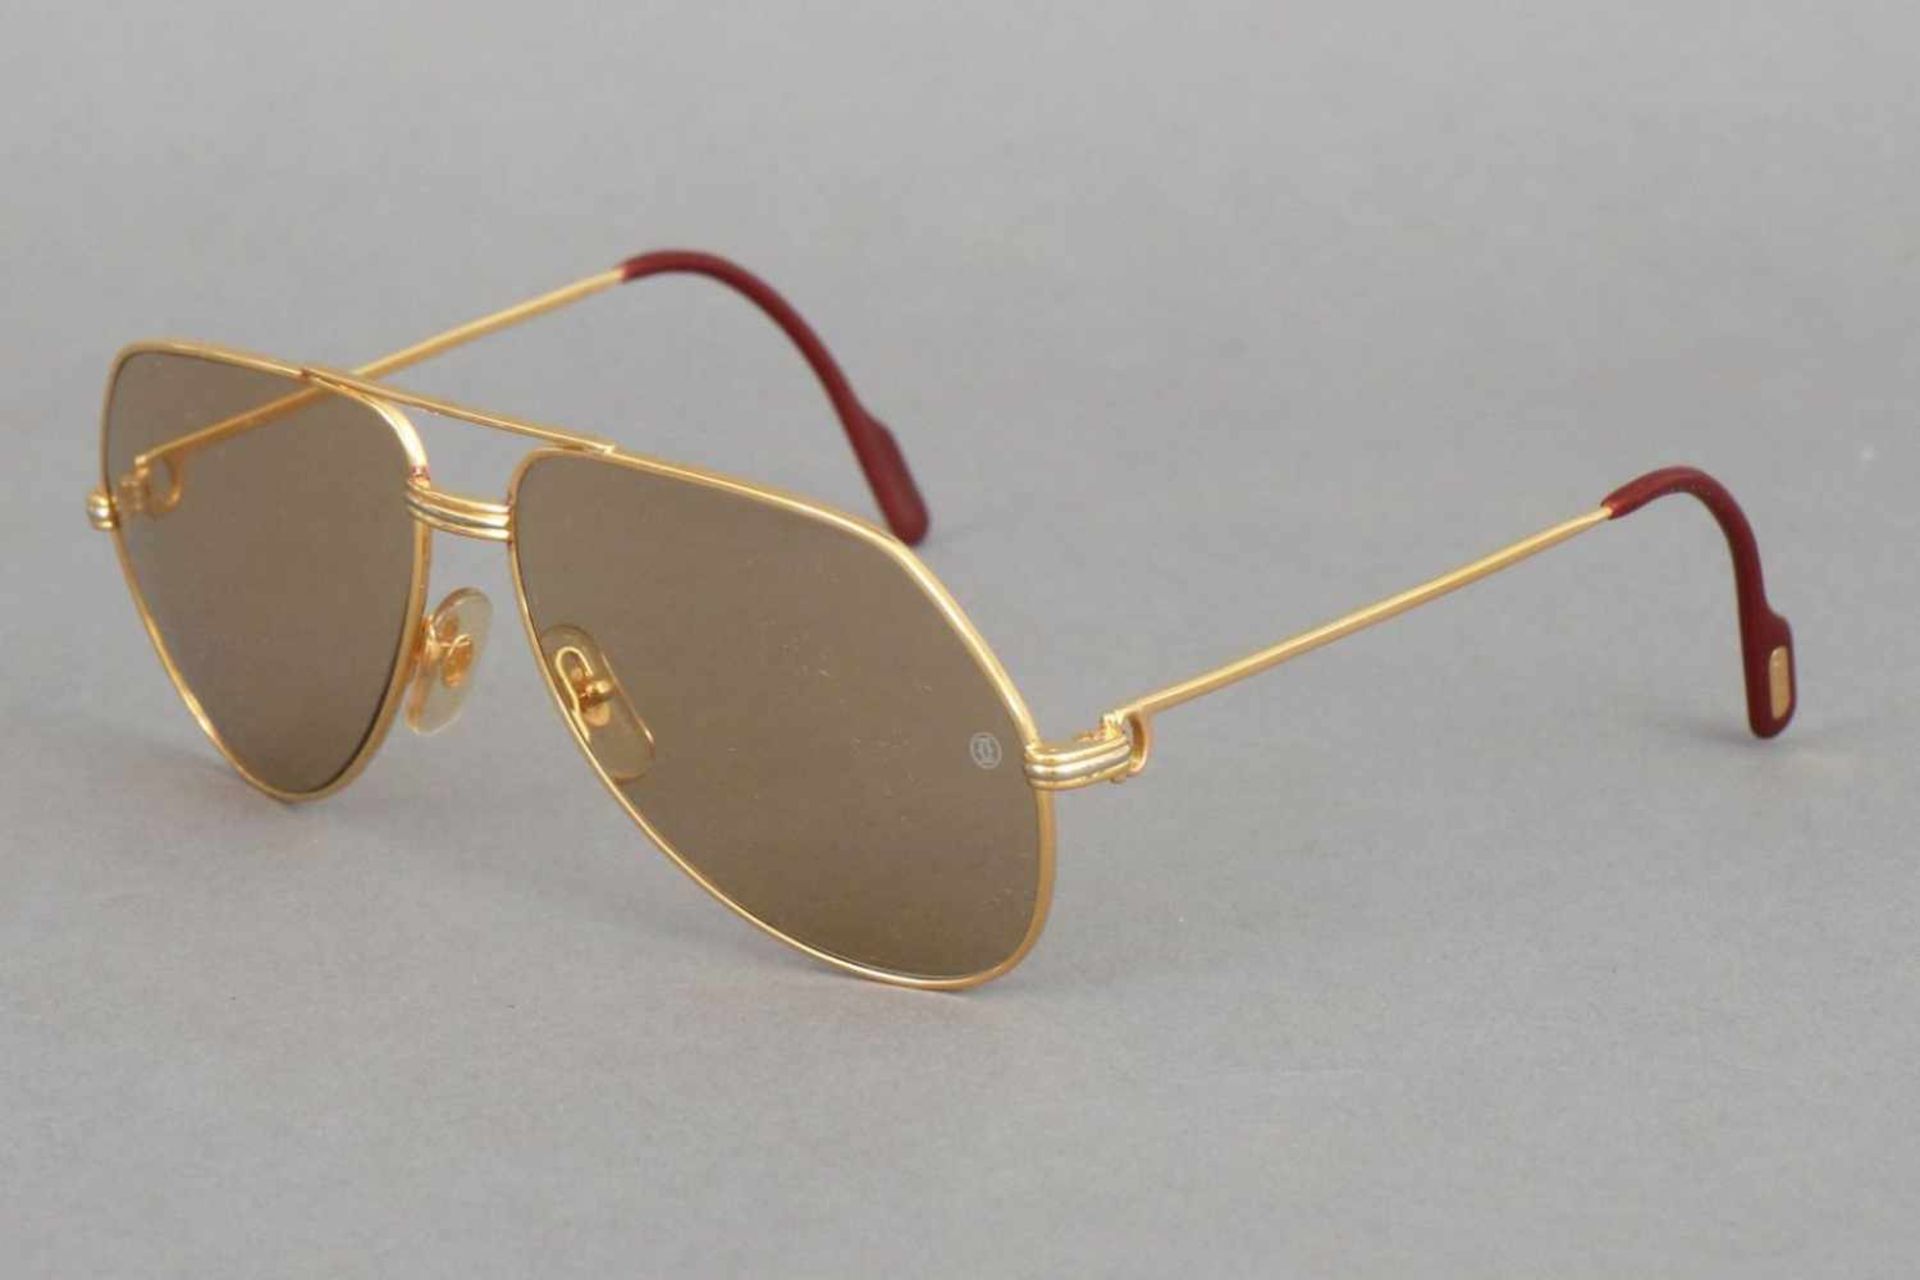 Le must de CARTIER Sonnenbrille ¨trinity¨vergoldetes Metall, bräunlich getöntes Glas, nummeriert - Bild 2 aus 3